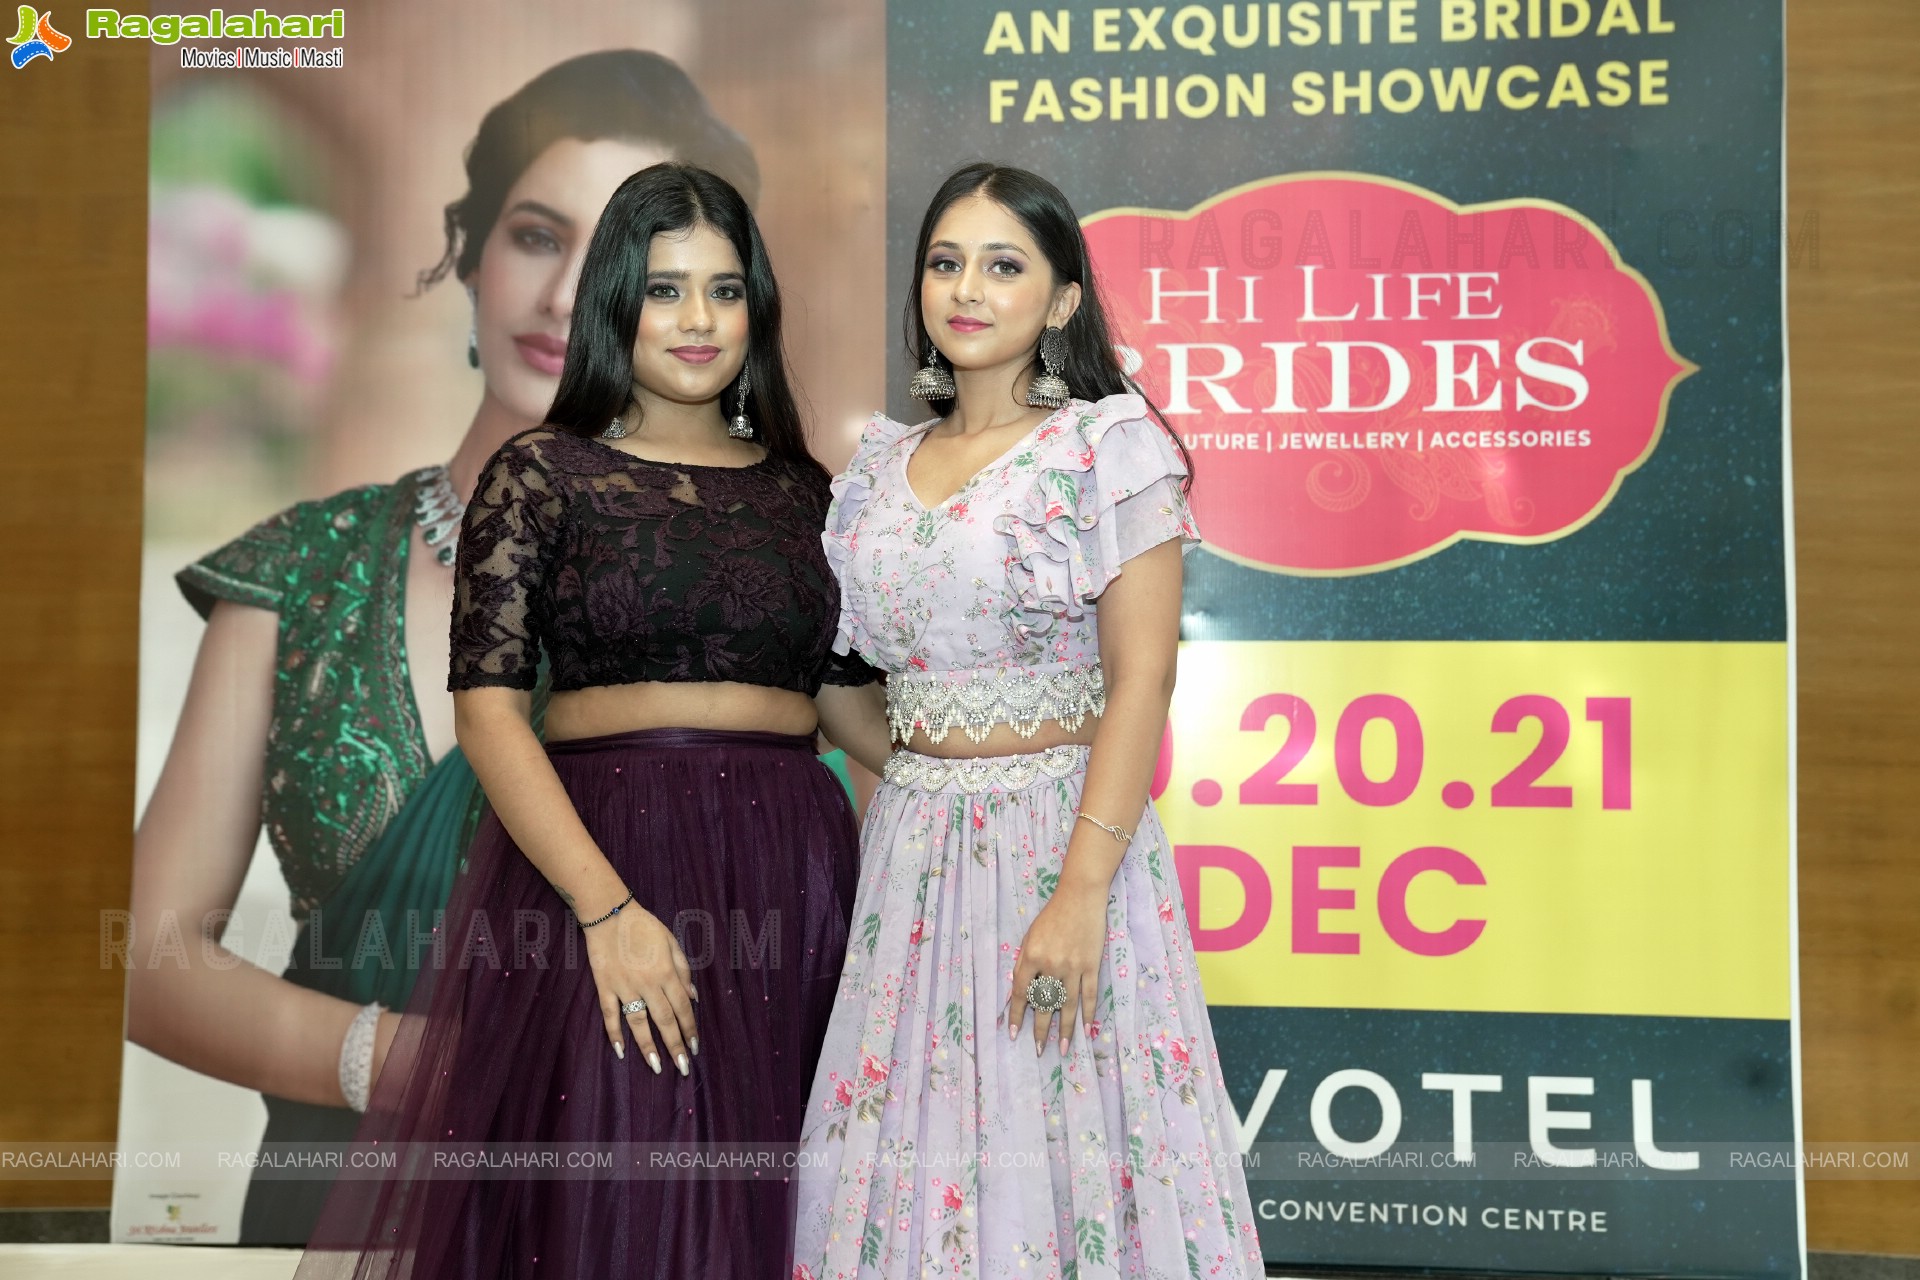 Hi Life Brides Exhibition December 2022 Announcement and Fashion Show